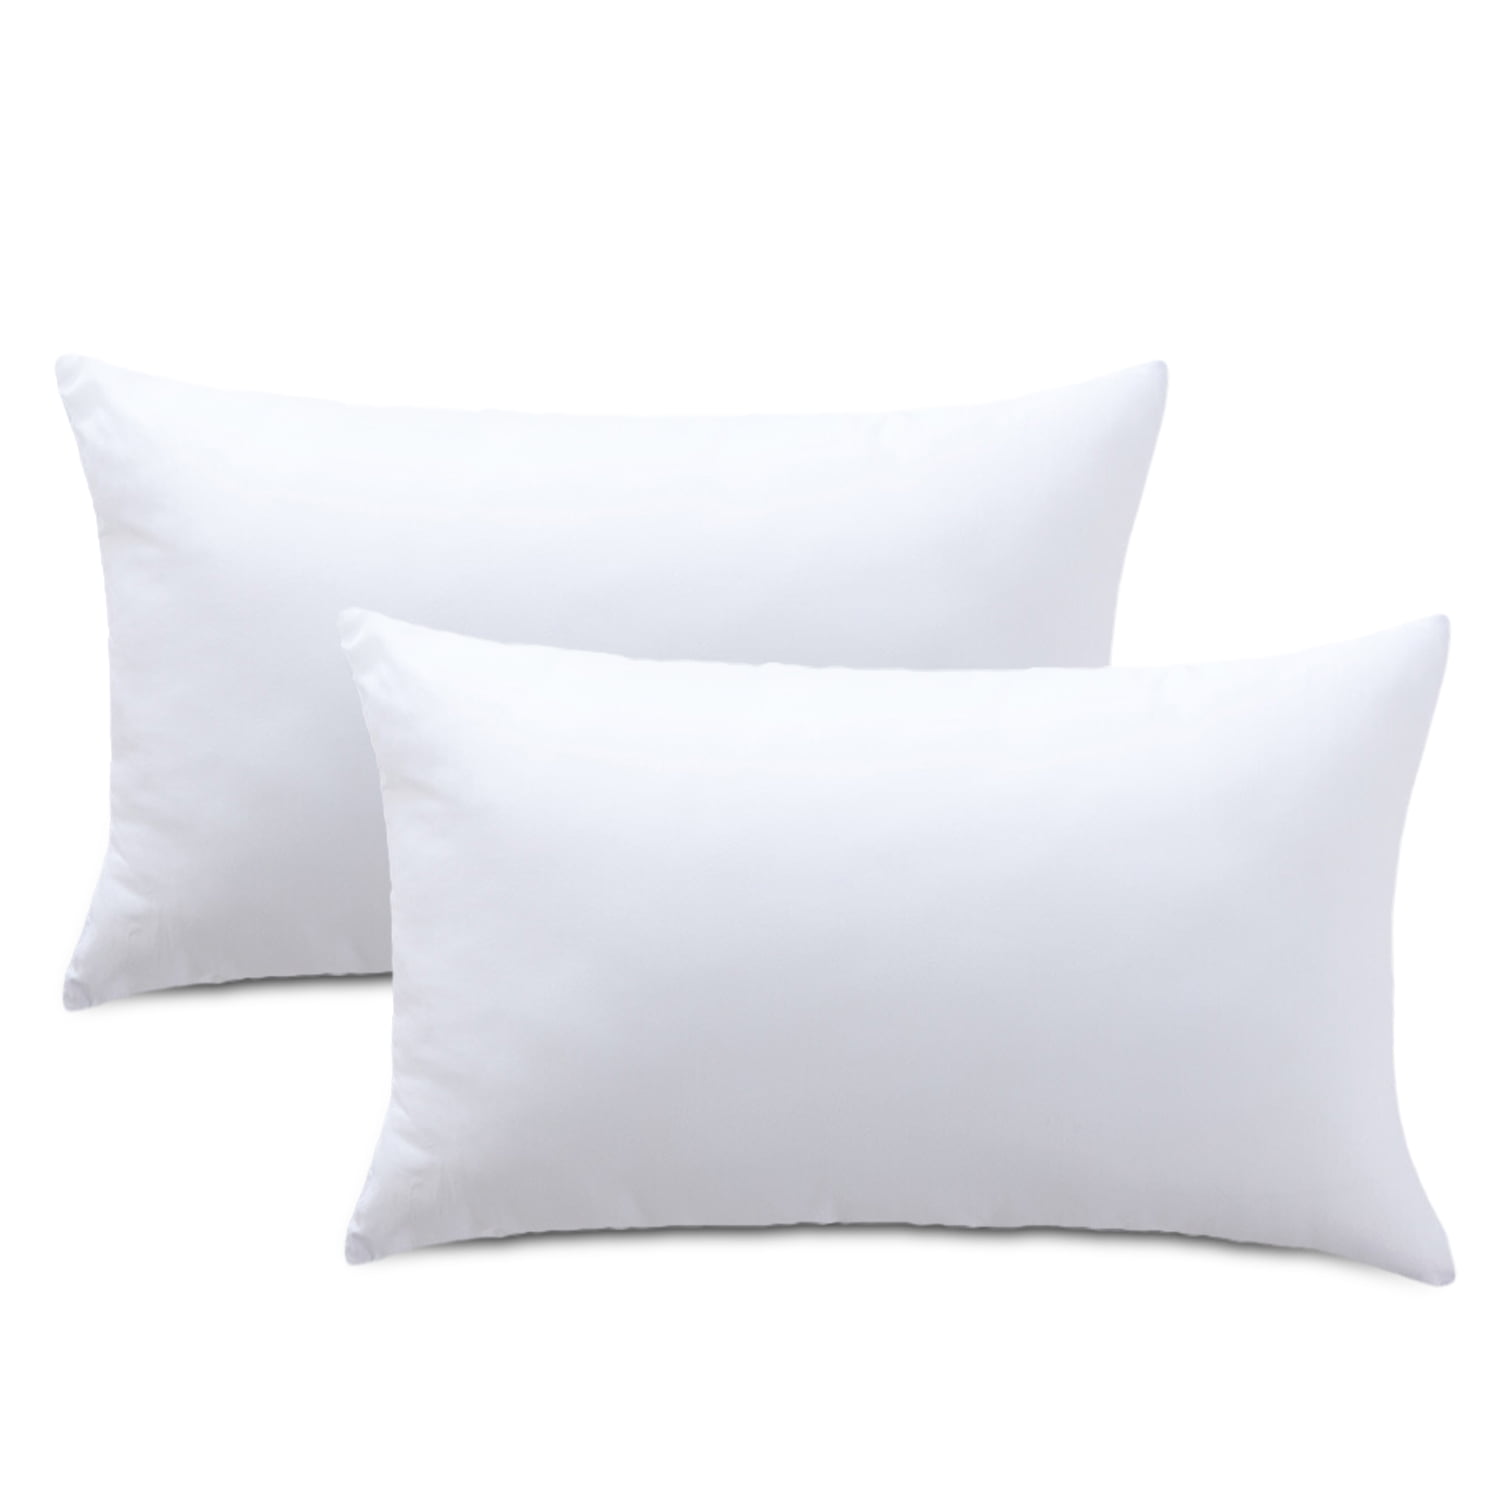 Emolli 12 x 20 Pillow Inserts Set of 2 Throw Pillow Inserts Premium Stuffer Down Alternative,Super Soft Microfiber Filled Decorative Pillow Cushion